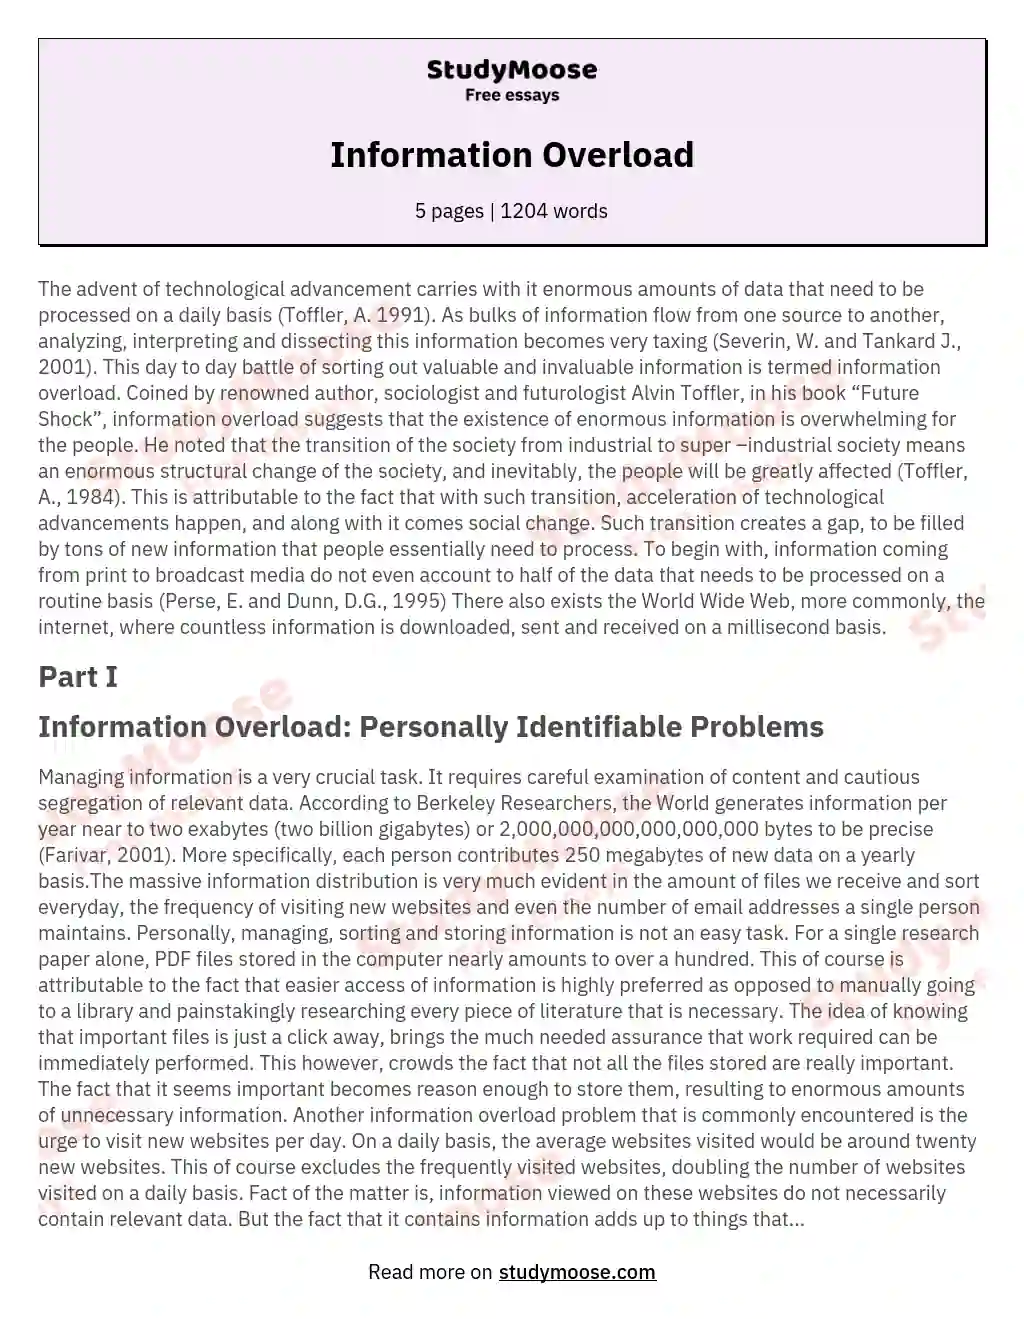 information overload essay